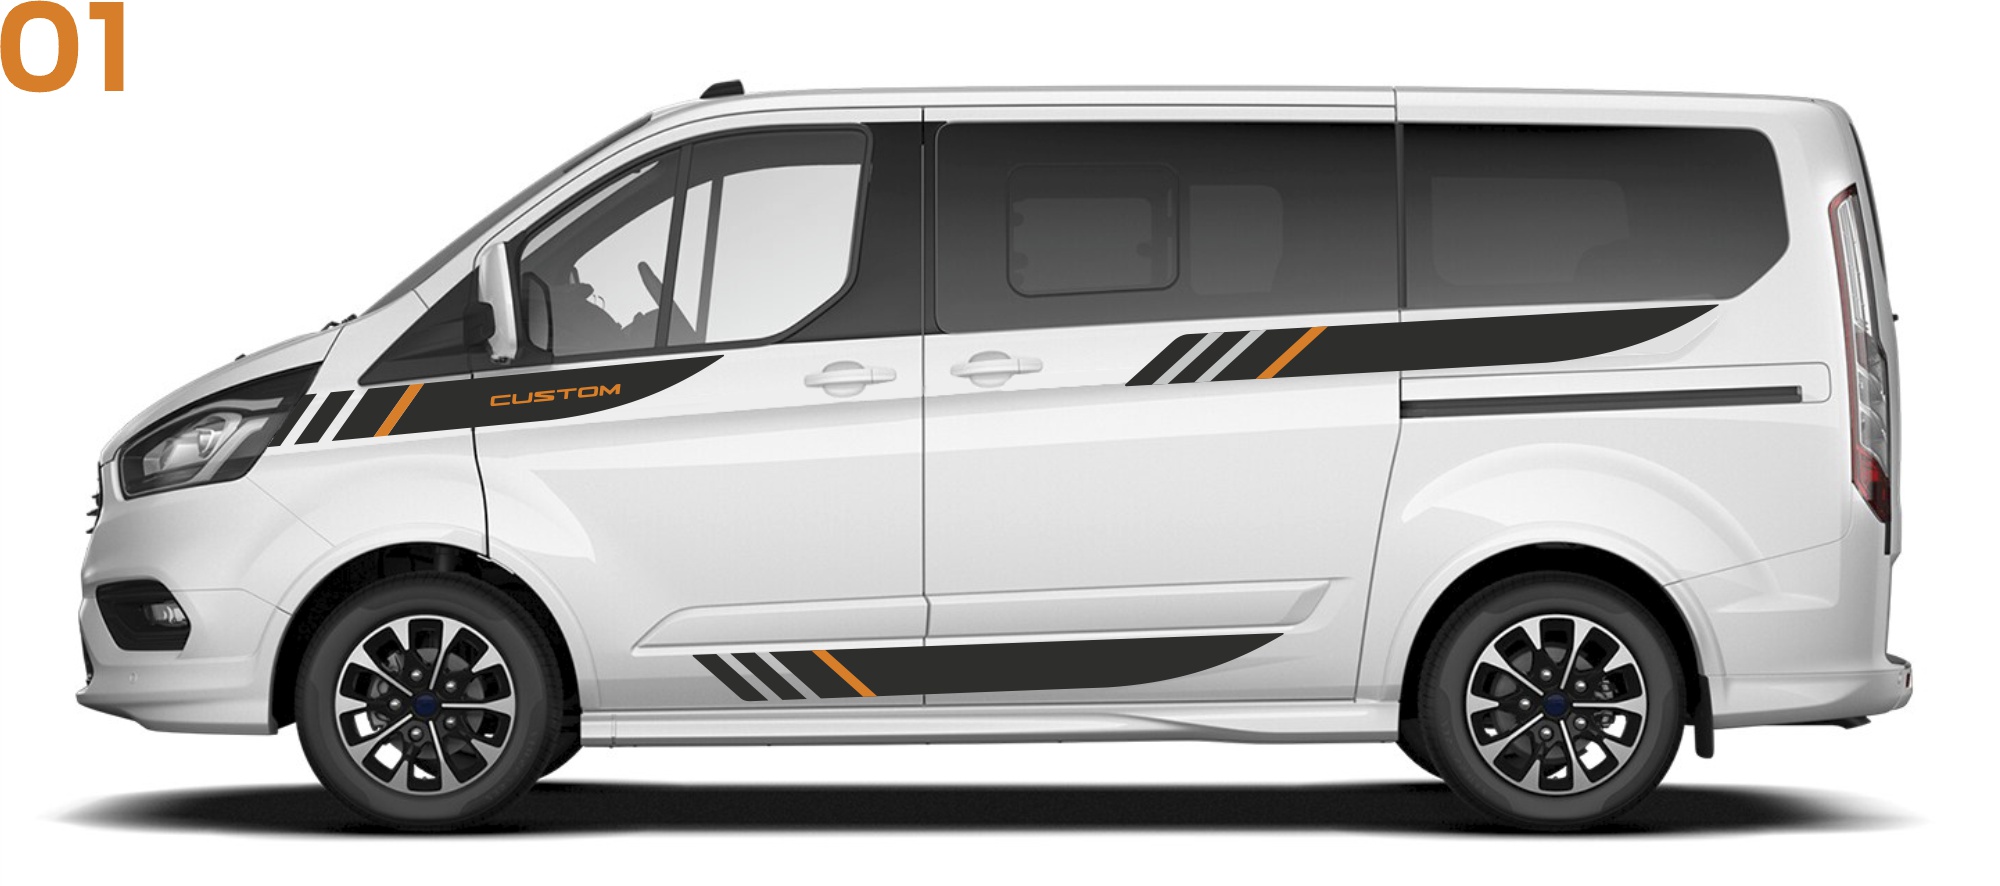 ford transit custom tourneo naklejki Carbon decals stripes sticker aufkleber nalepky samolepky tuning